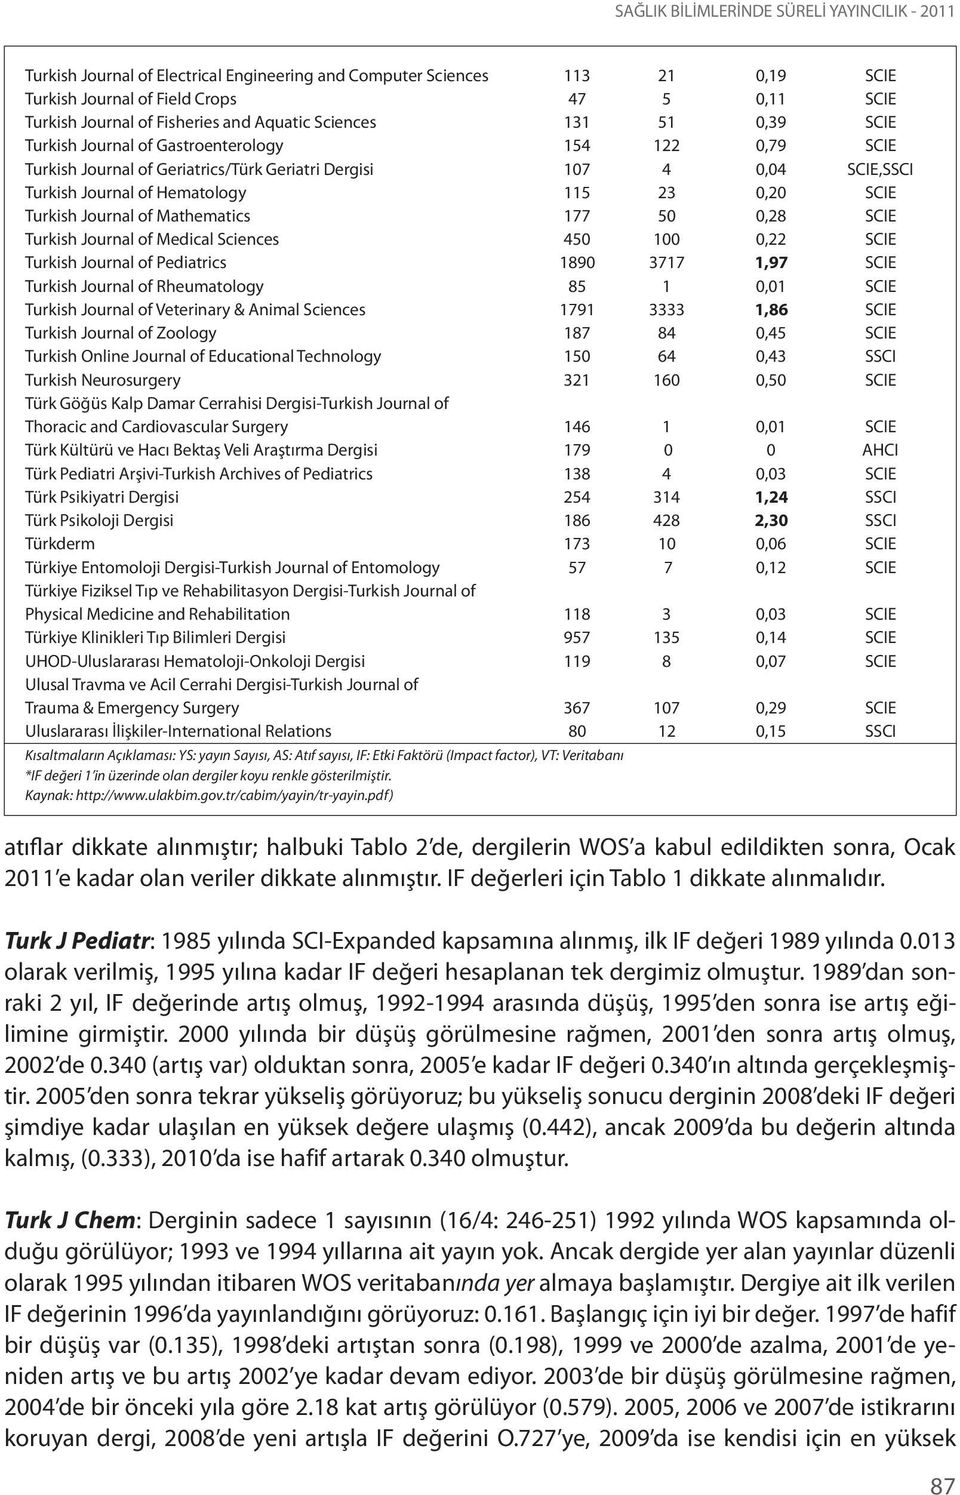 Mathematics 177 50 0,28 SCIE Turkish Journal of Medical Sciences 450 100 0,22 SCIE Turkish Journal of Pediatrics 1890 3717 1,97 SCIE Turkish Journal of Rheumatology 85 1 0,01 SCIE Turkish Journal of